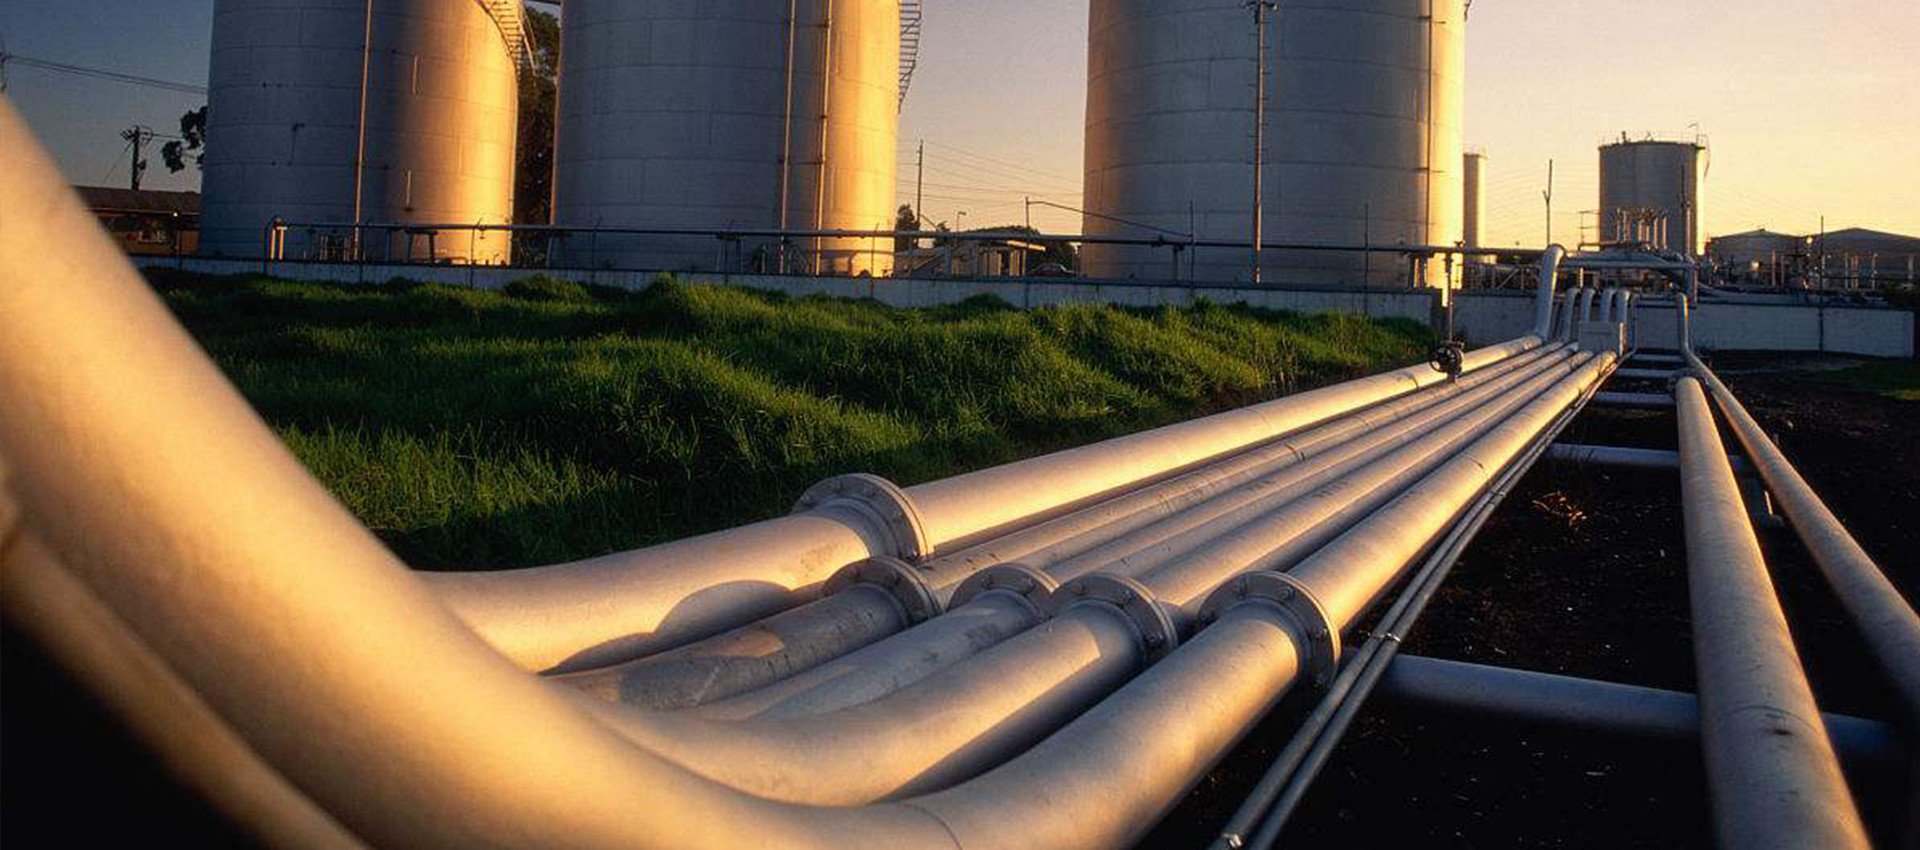 Aktueller Firmenfall über Öl-Gas-Fitting